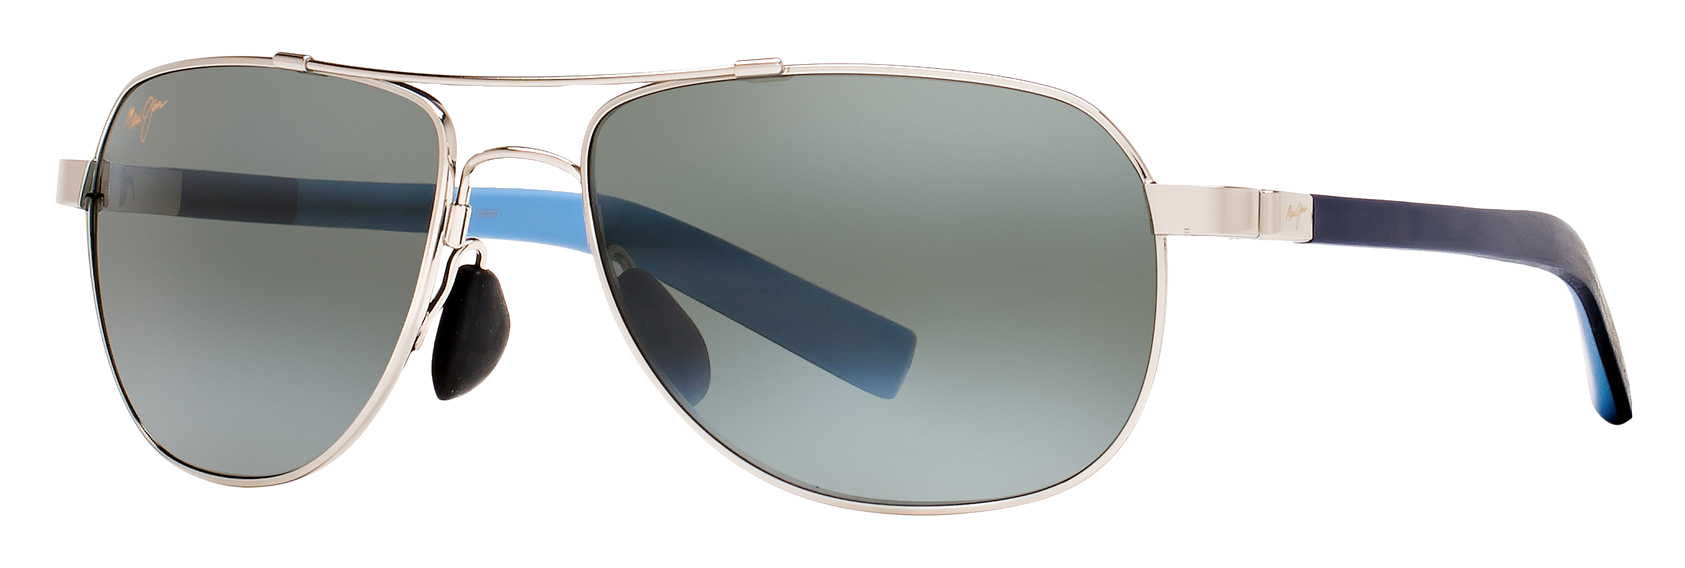 Maui Jim Guardrails Polarized Sunglasses | Bass Pro Shops